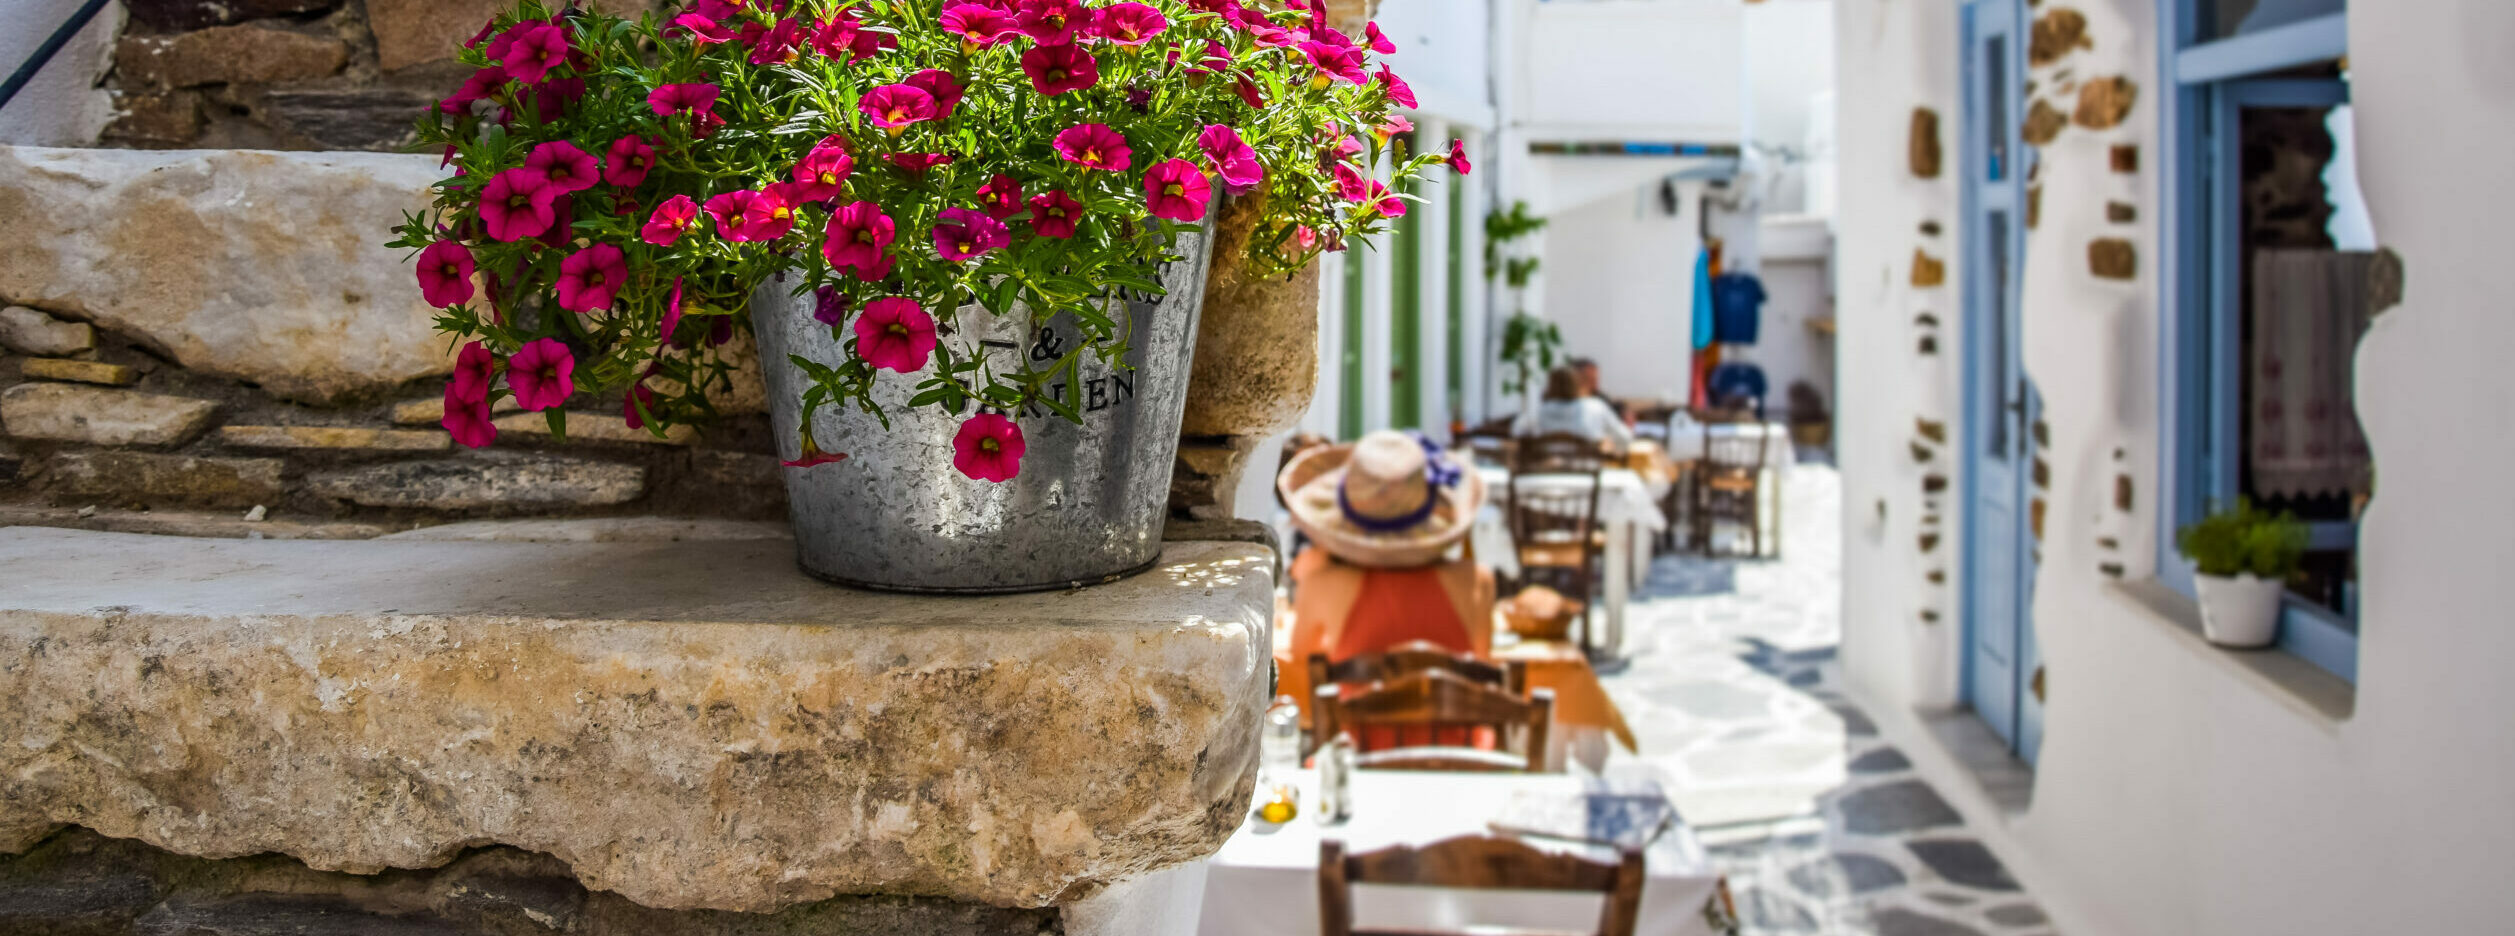 Naxos: The “melachrino”, a dessert that remains unforgettable